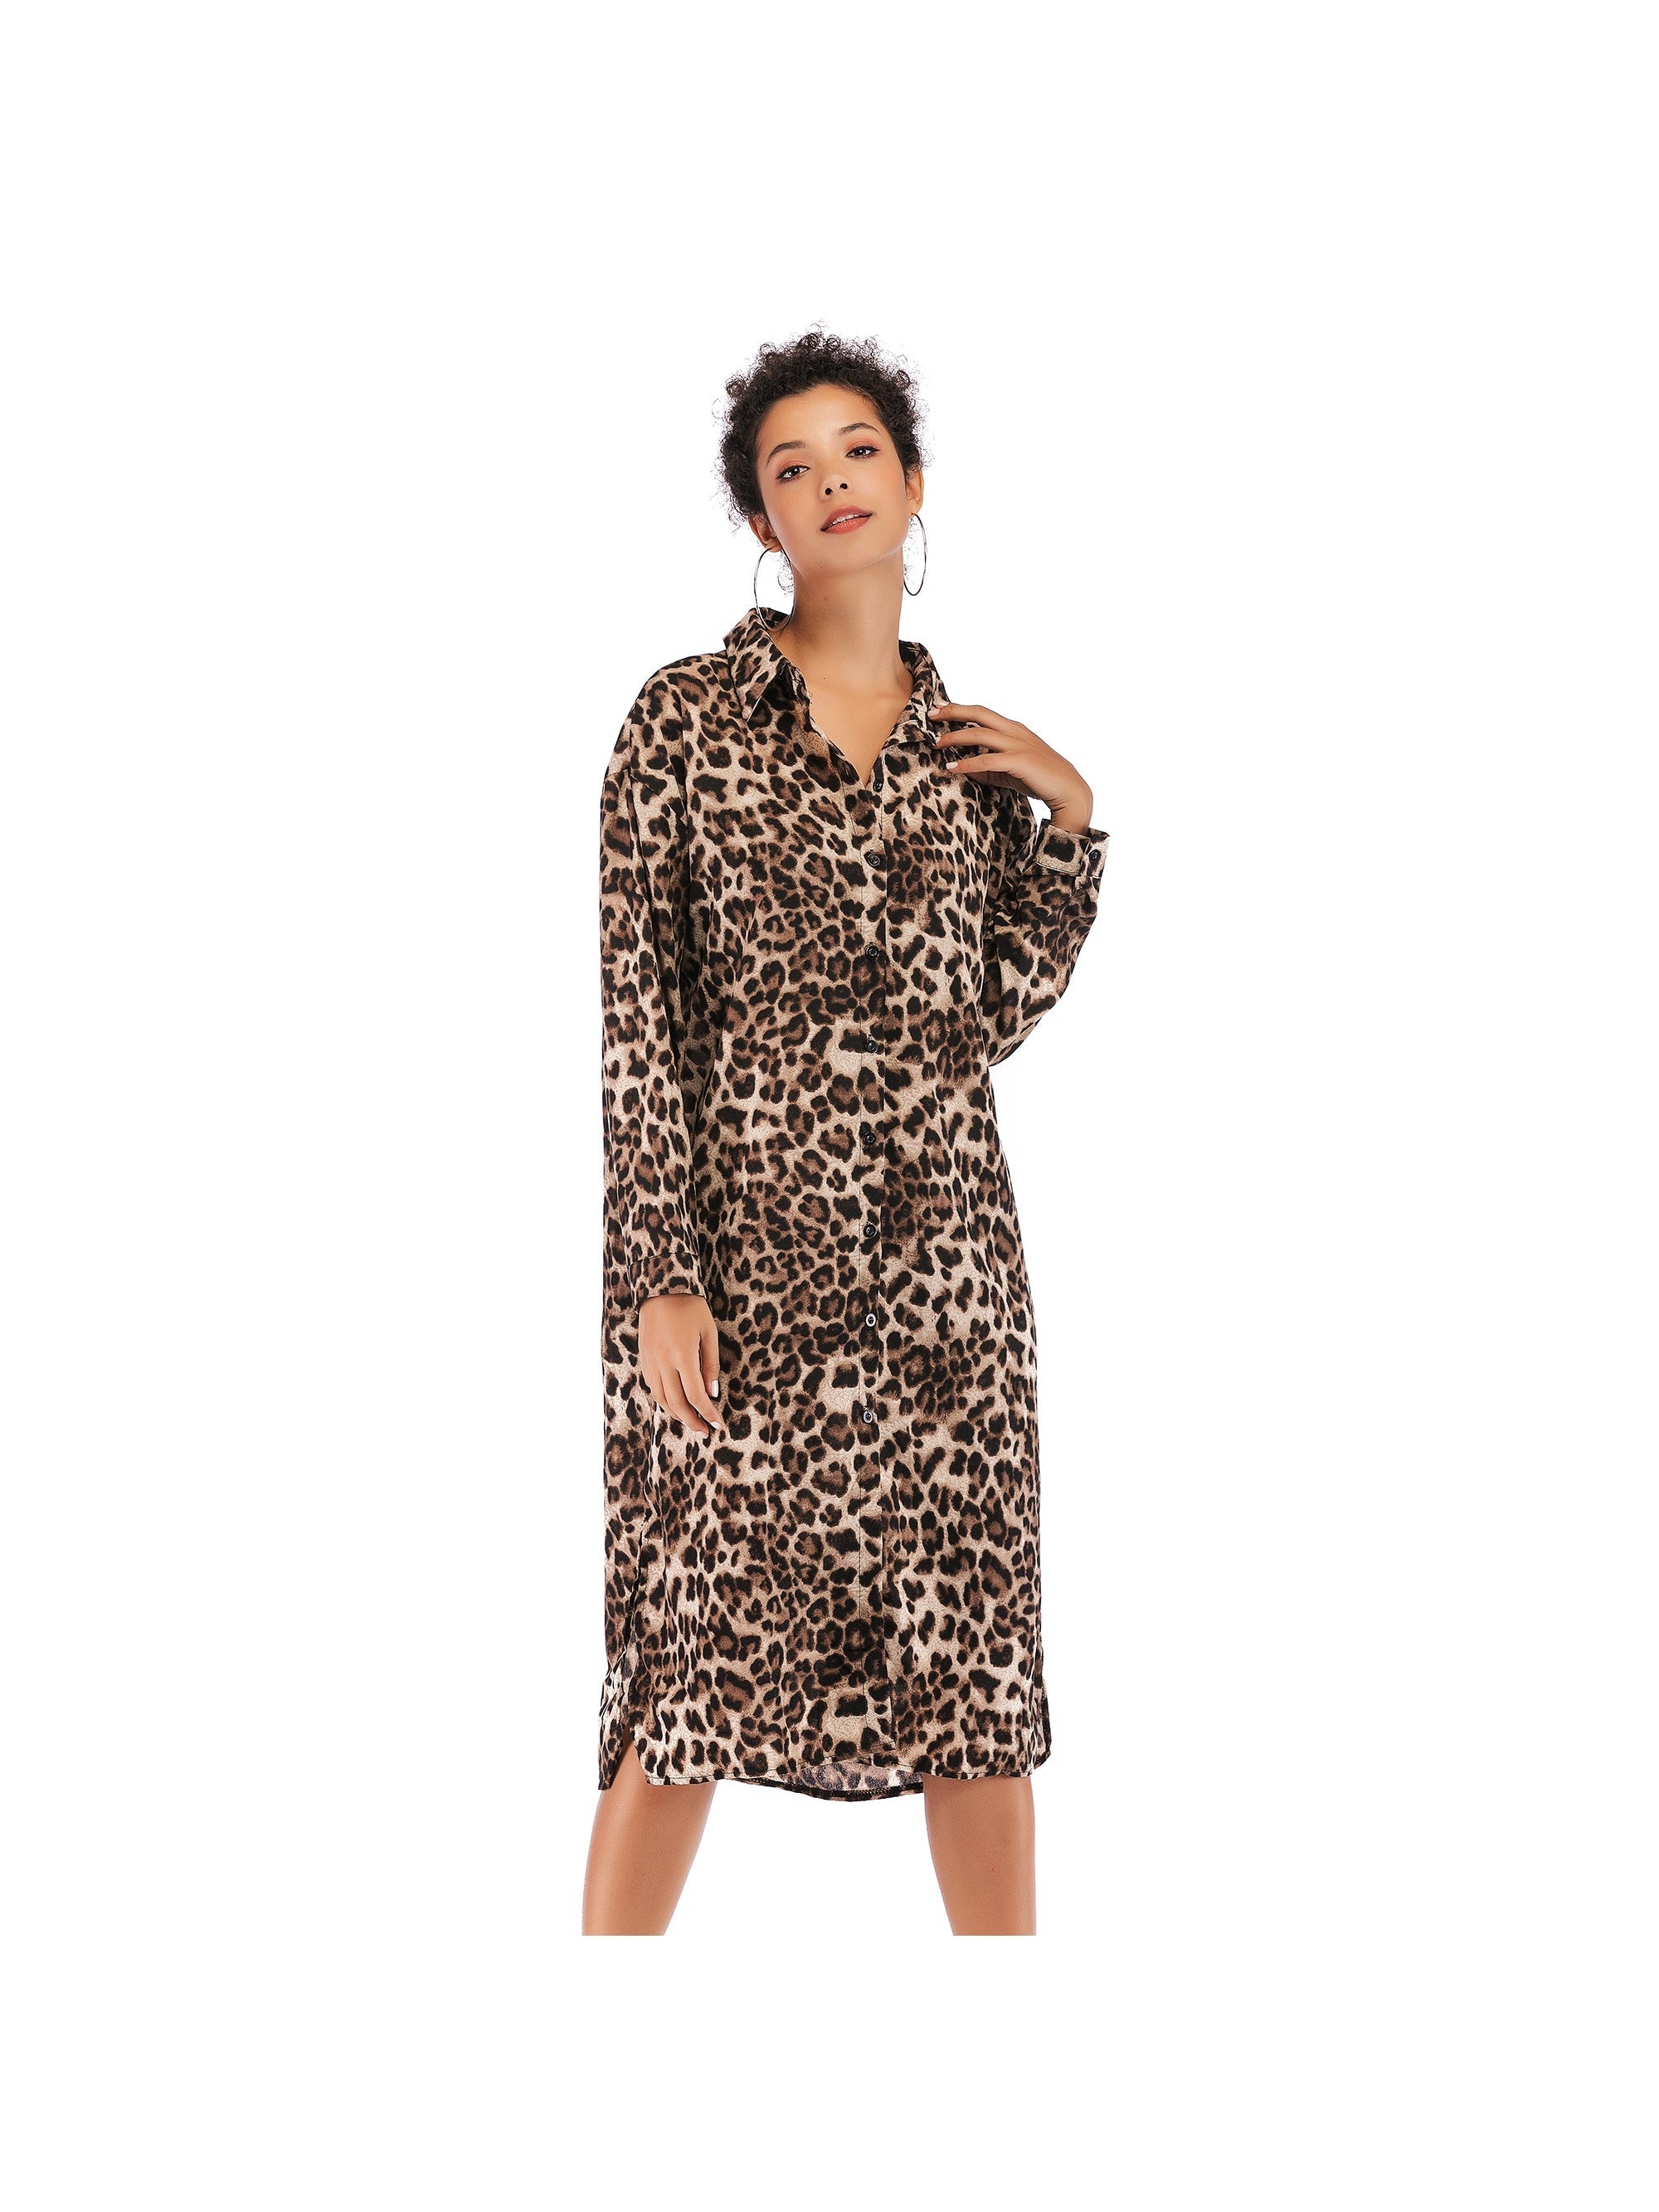 Leopard print dress mid-length split shirt skirt